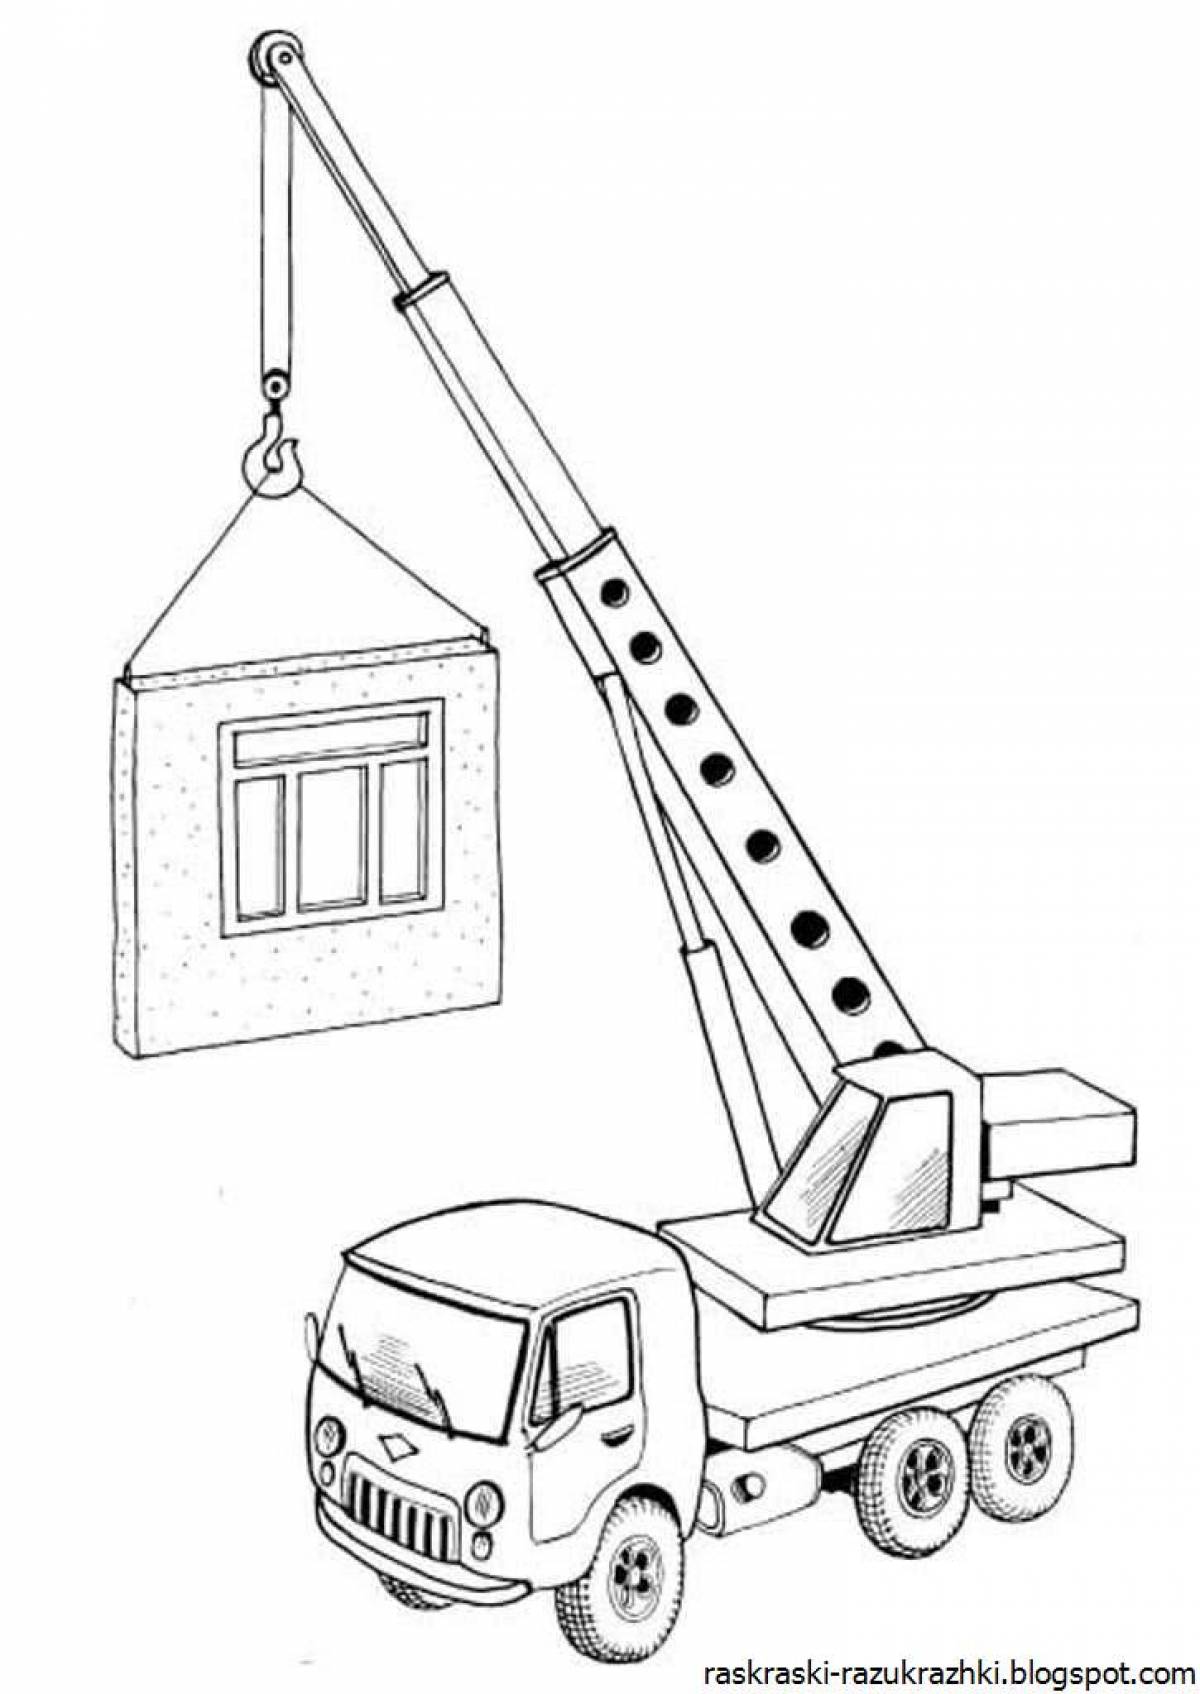 Hoisting crane #2